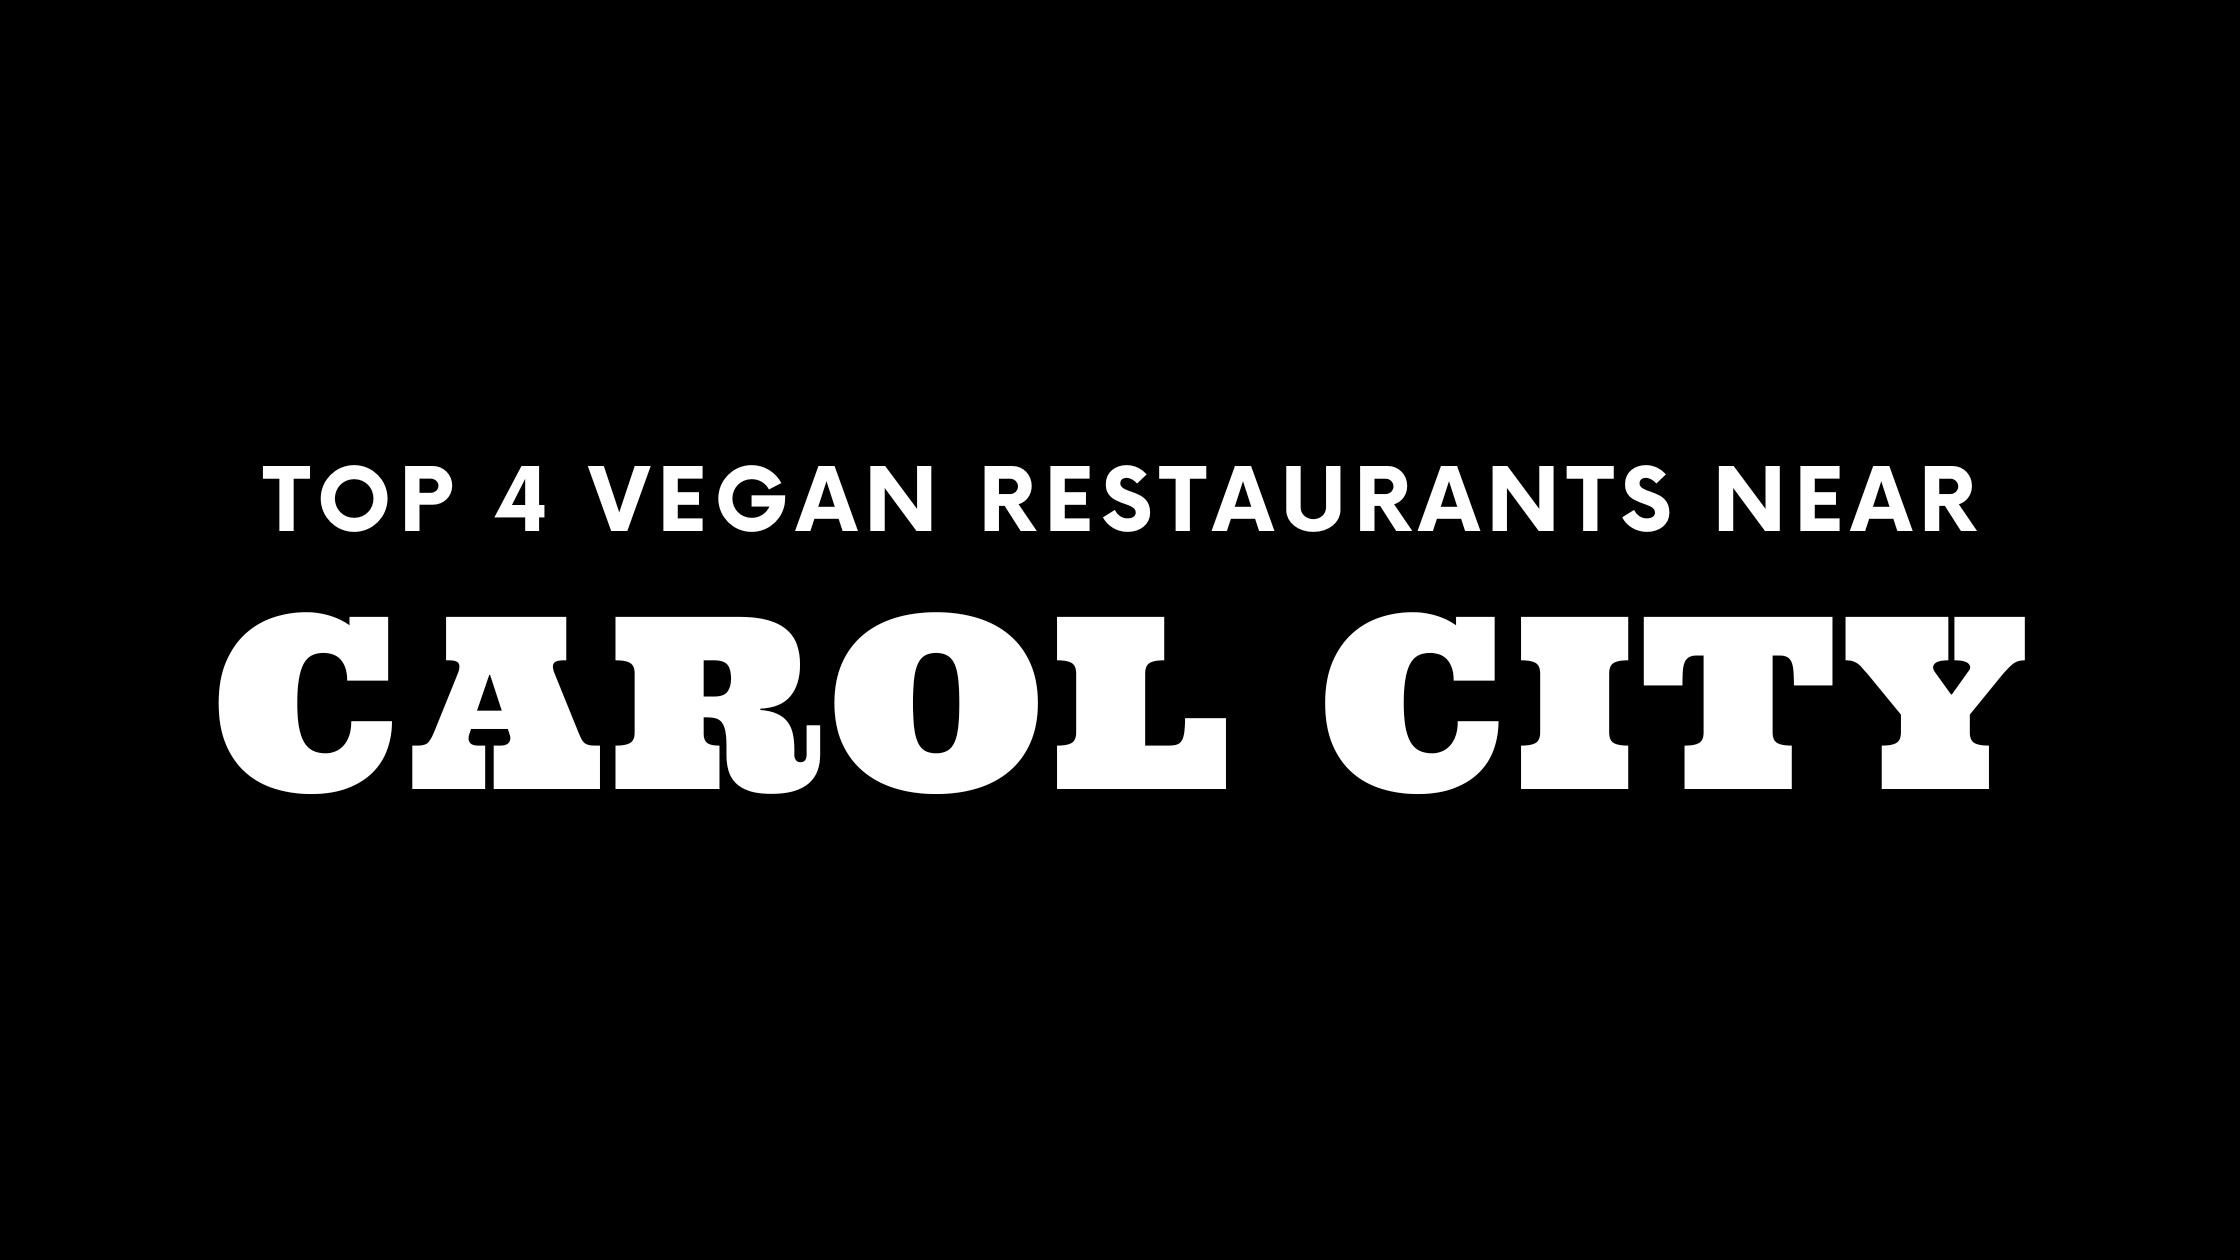 Top 4 Vegan Restaurants near Carol City